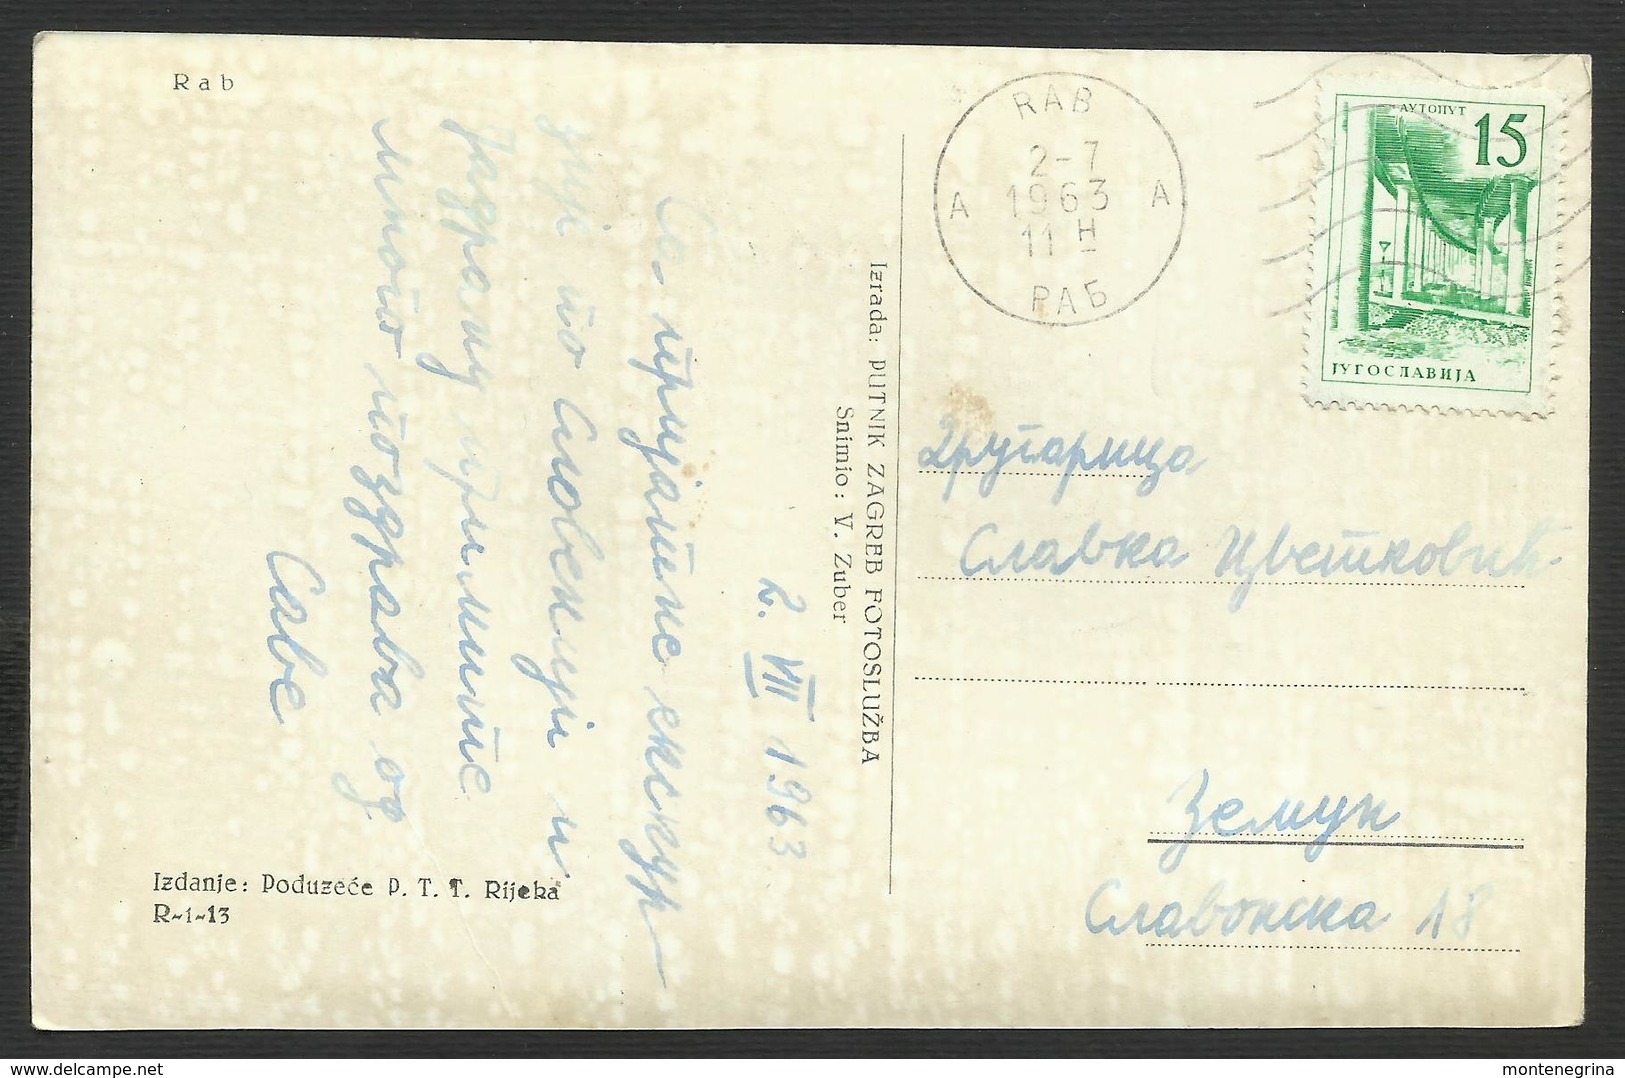 CROATIA Rab Old Postcard (see Sales Conditions) 00469 - Croatia